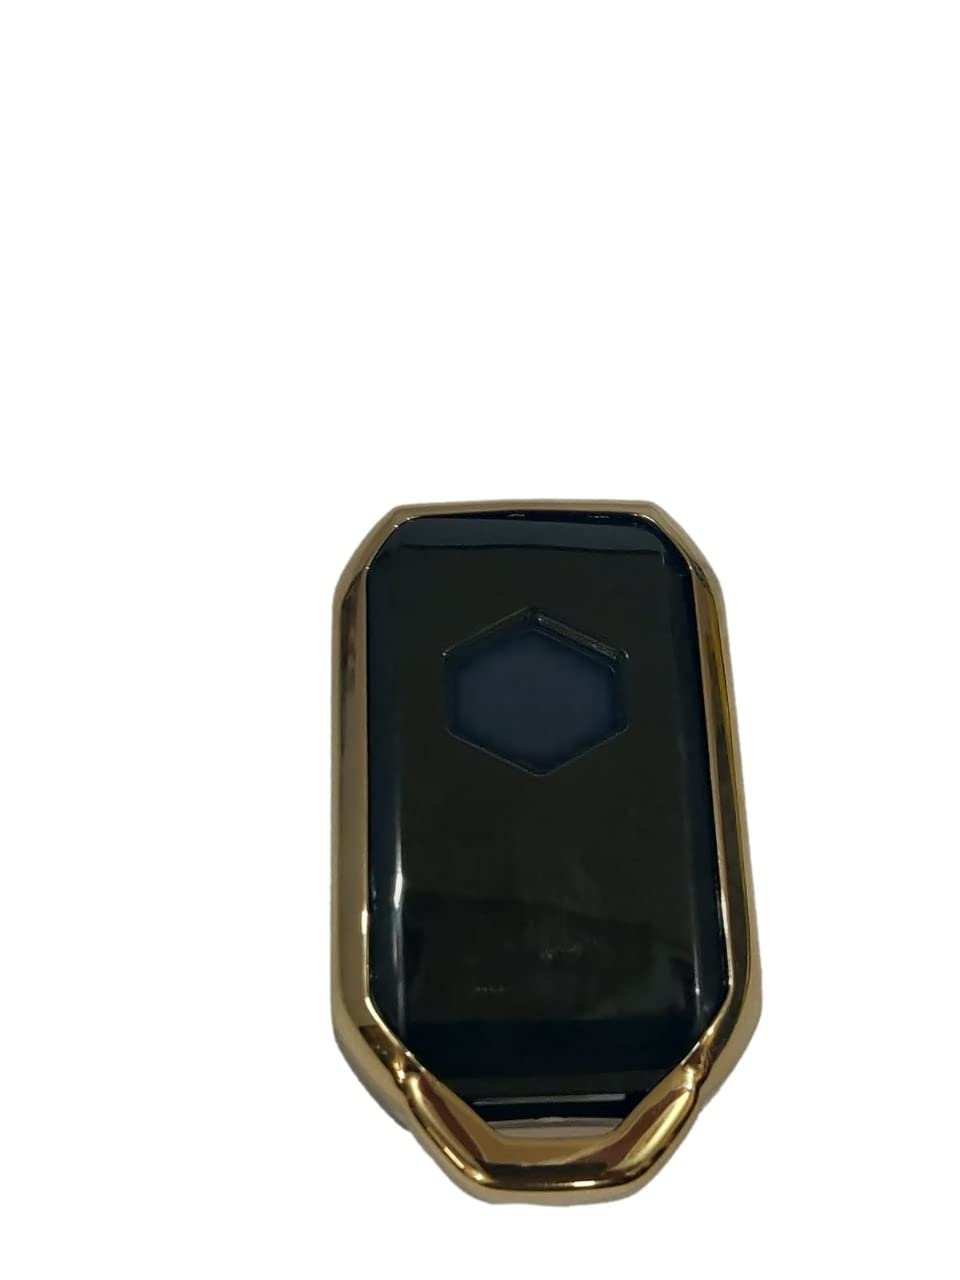 Carbon TPU Key Cover Compatible for Suzuki Baleno, XL6, Swift, Ertiga, Dzire (2 Button Smart Key,Gold/Black)